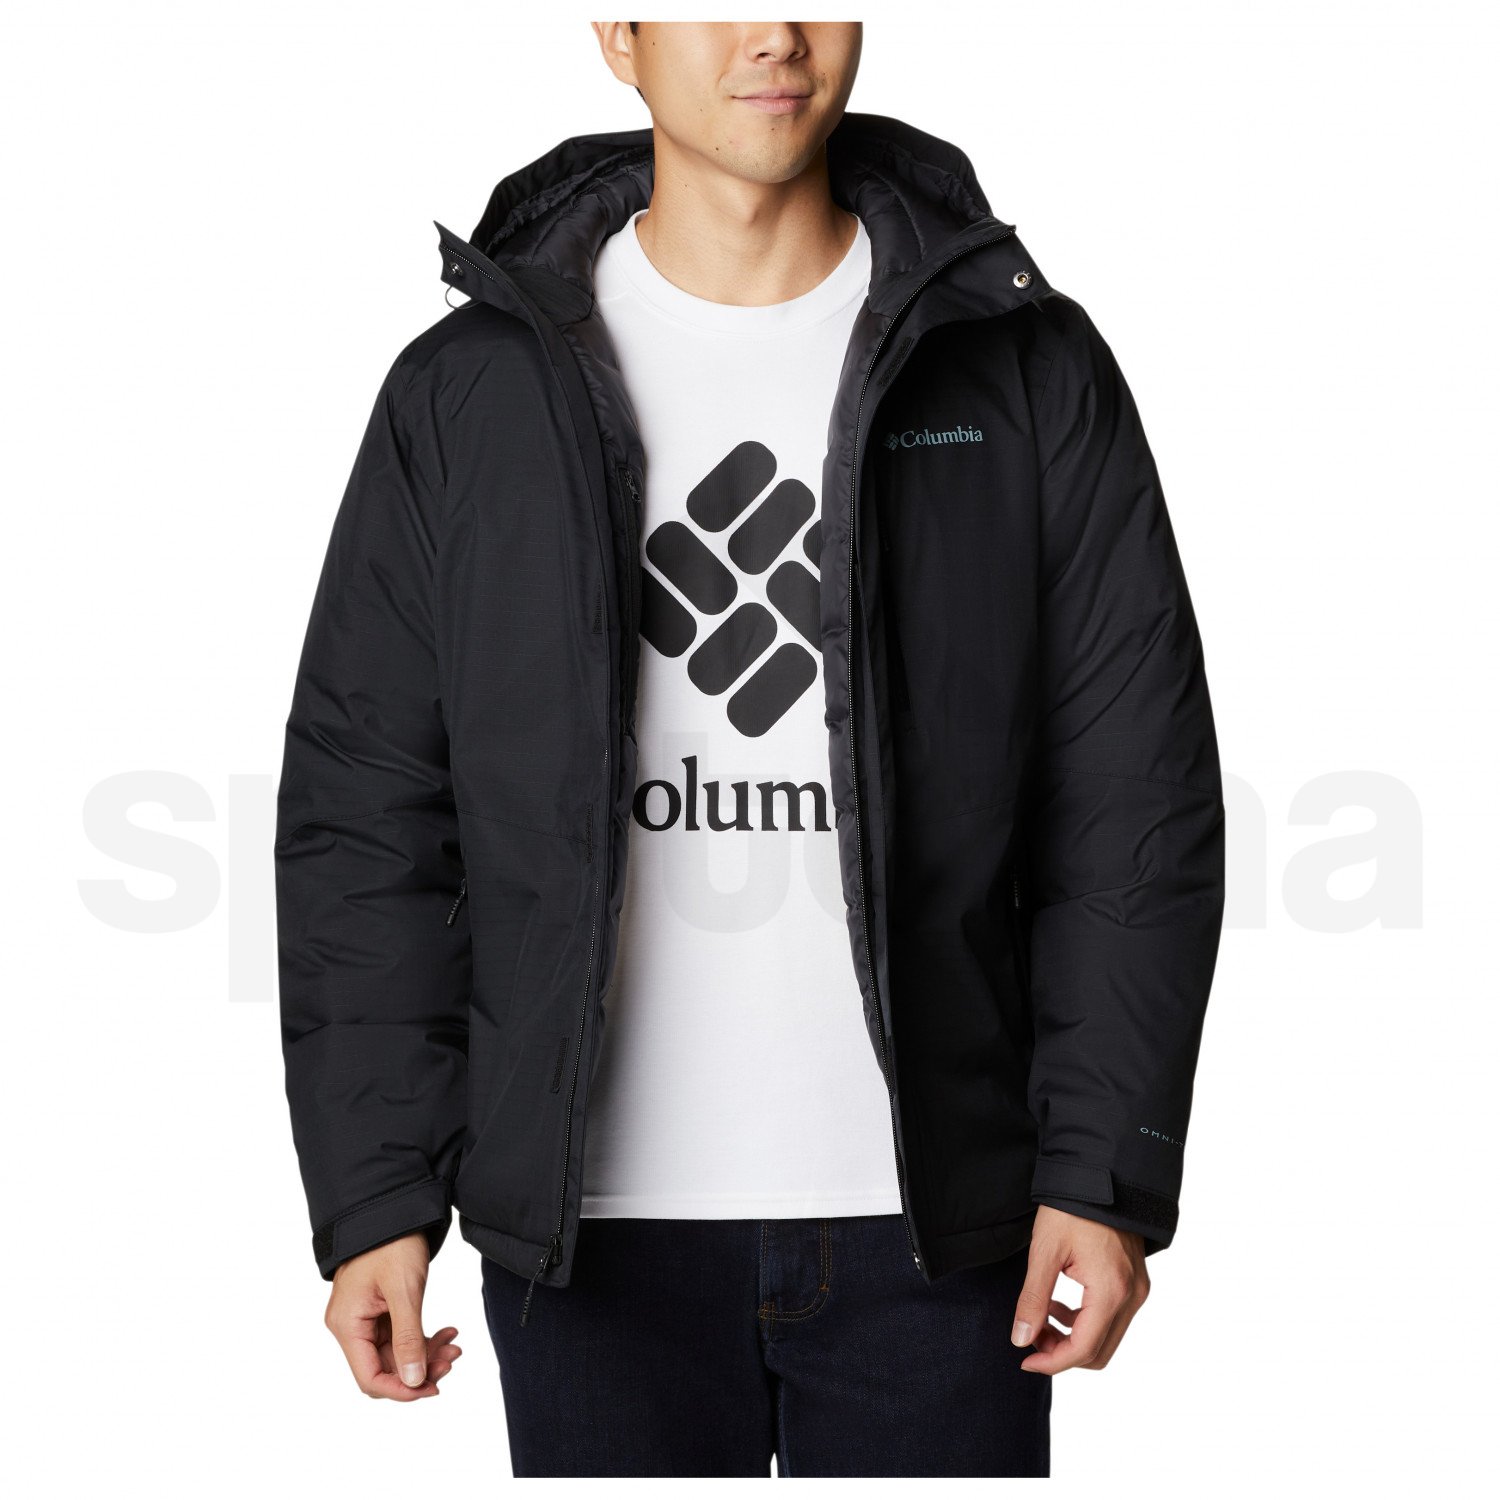 columbia-oak-harbor-insulated-jacket-winter-jacket-detail-5